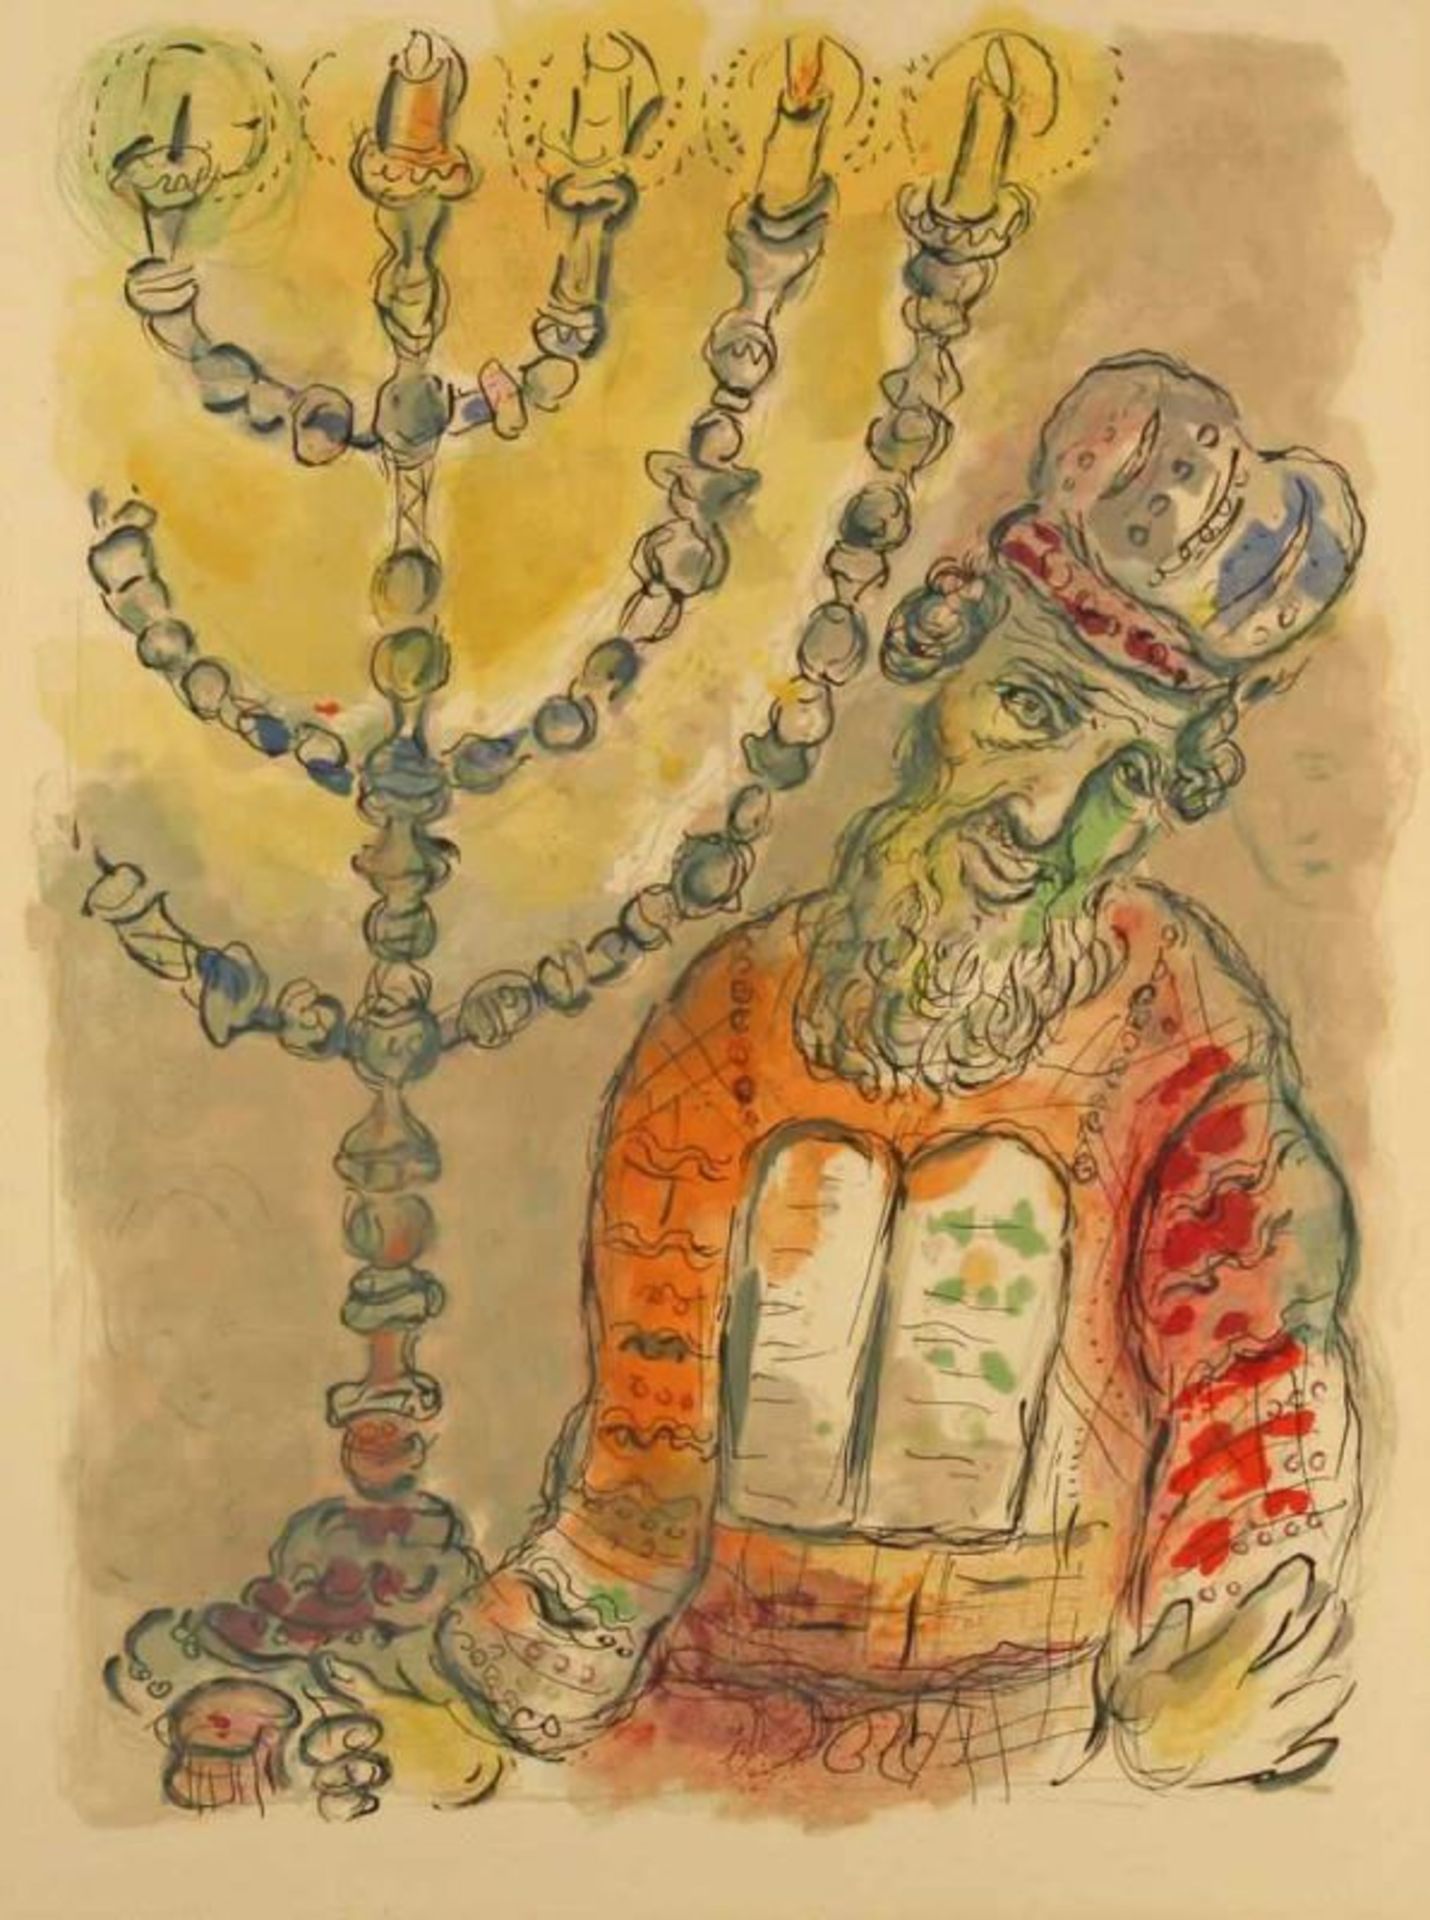 Chagall, Marc (1887 Witebsk - 1985 Saint Paul de Vence), Farblithografie, "Salbe Aaron und seine